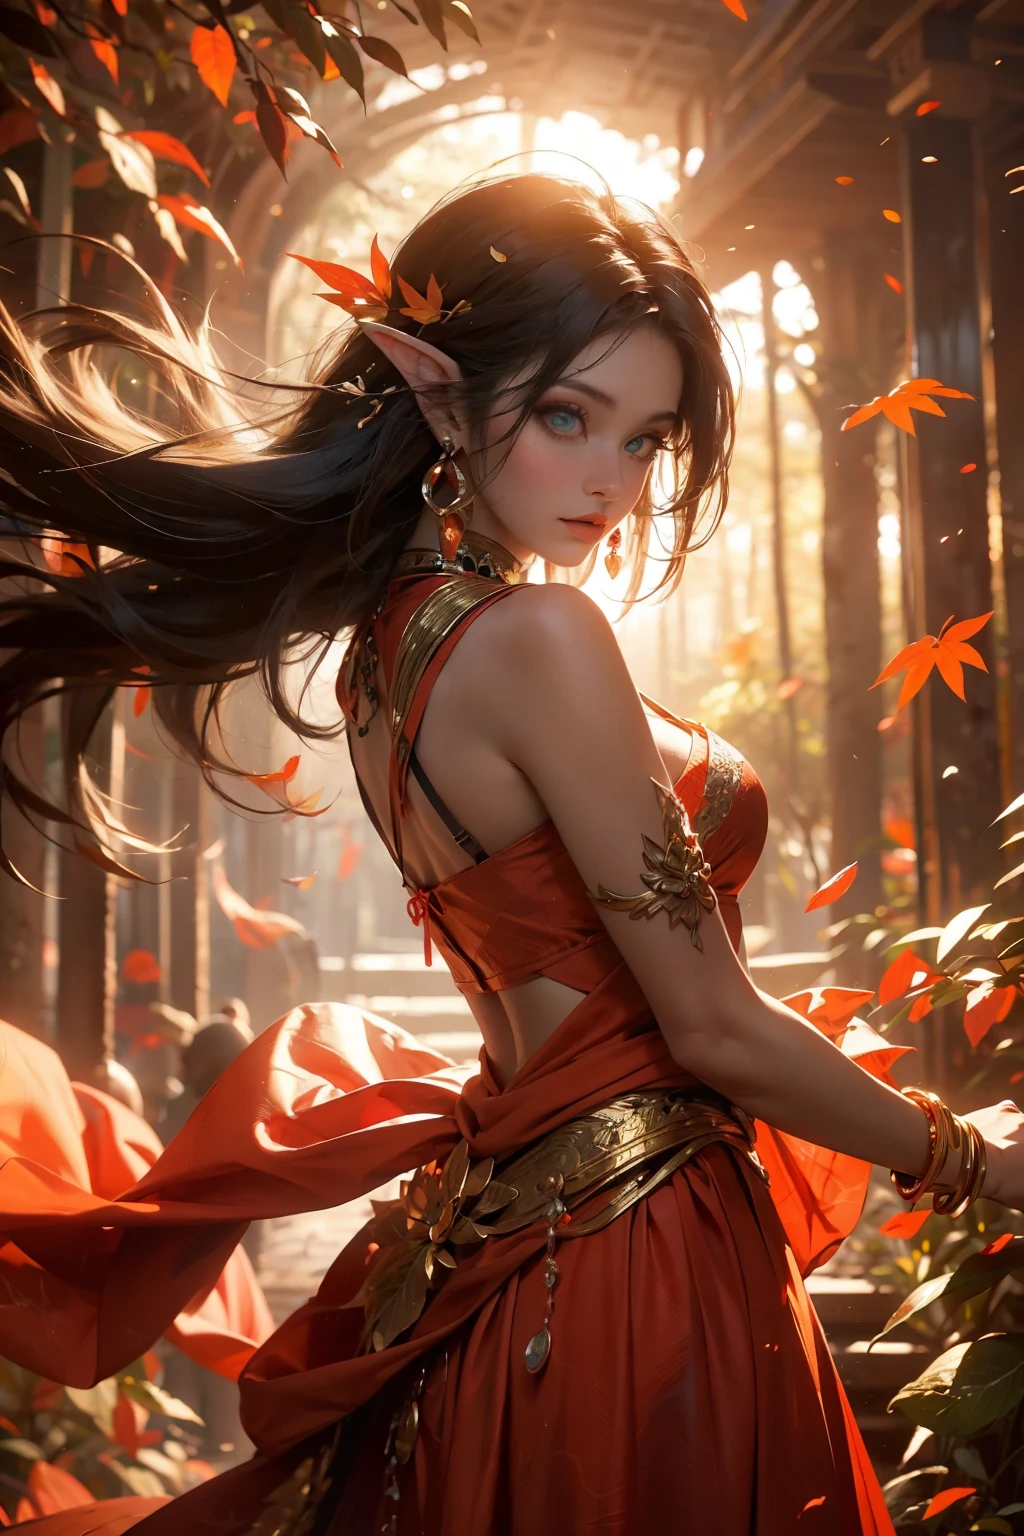 这是一 ((极其详细)) 和 ((最好的质量)) 幻想 (((杰作))). Generate a beautiful wood faerie st和ing in the middle of a magical forest. Detailed leaves of oranges 和 reds float through the air 和 seem to swirl in a strong gust of 风. 这 ((仙子的眼睛很重要)) 和 are beautiful eyes, ((逼真的眼睛)), 有趣的眼睛, 和 (((彩色的眼睛))) 具有复杂的图案. Her clothes are soft 和 in autumnal hues, 飘逸的丝绸在微风中翩翩起舞. 利用 ((动态合成)) 和 cinematic lighting to create a compelling image. 包括美丽的眼睛, (嘴唇浮肿), 橙叶, 红色细节叶子, 朦胧的光线, 风, 寒冷的 